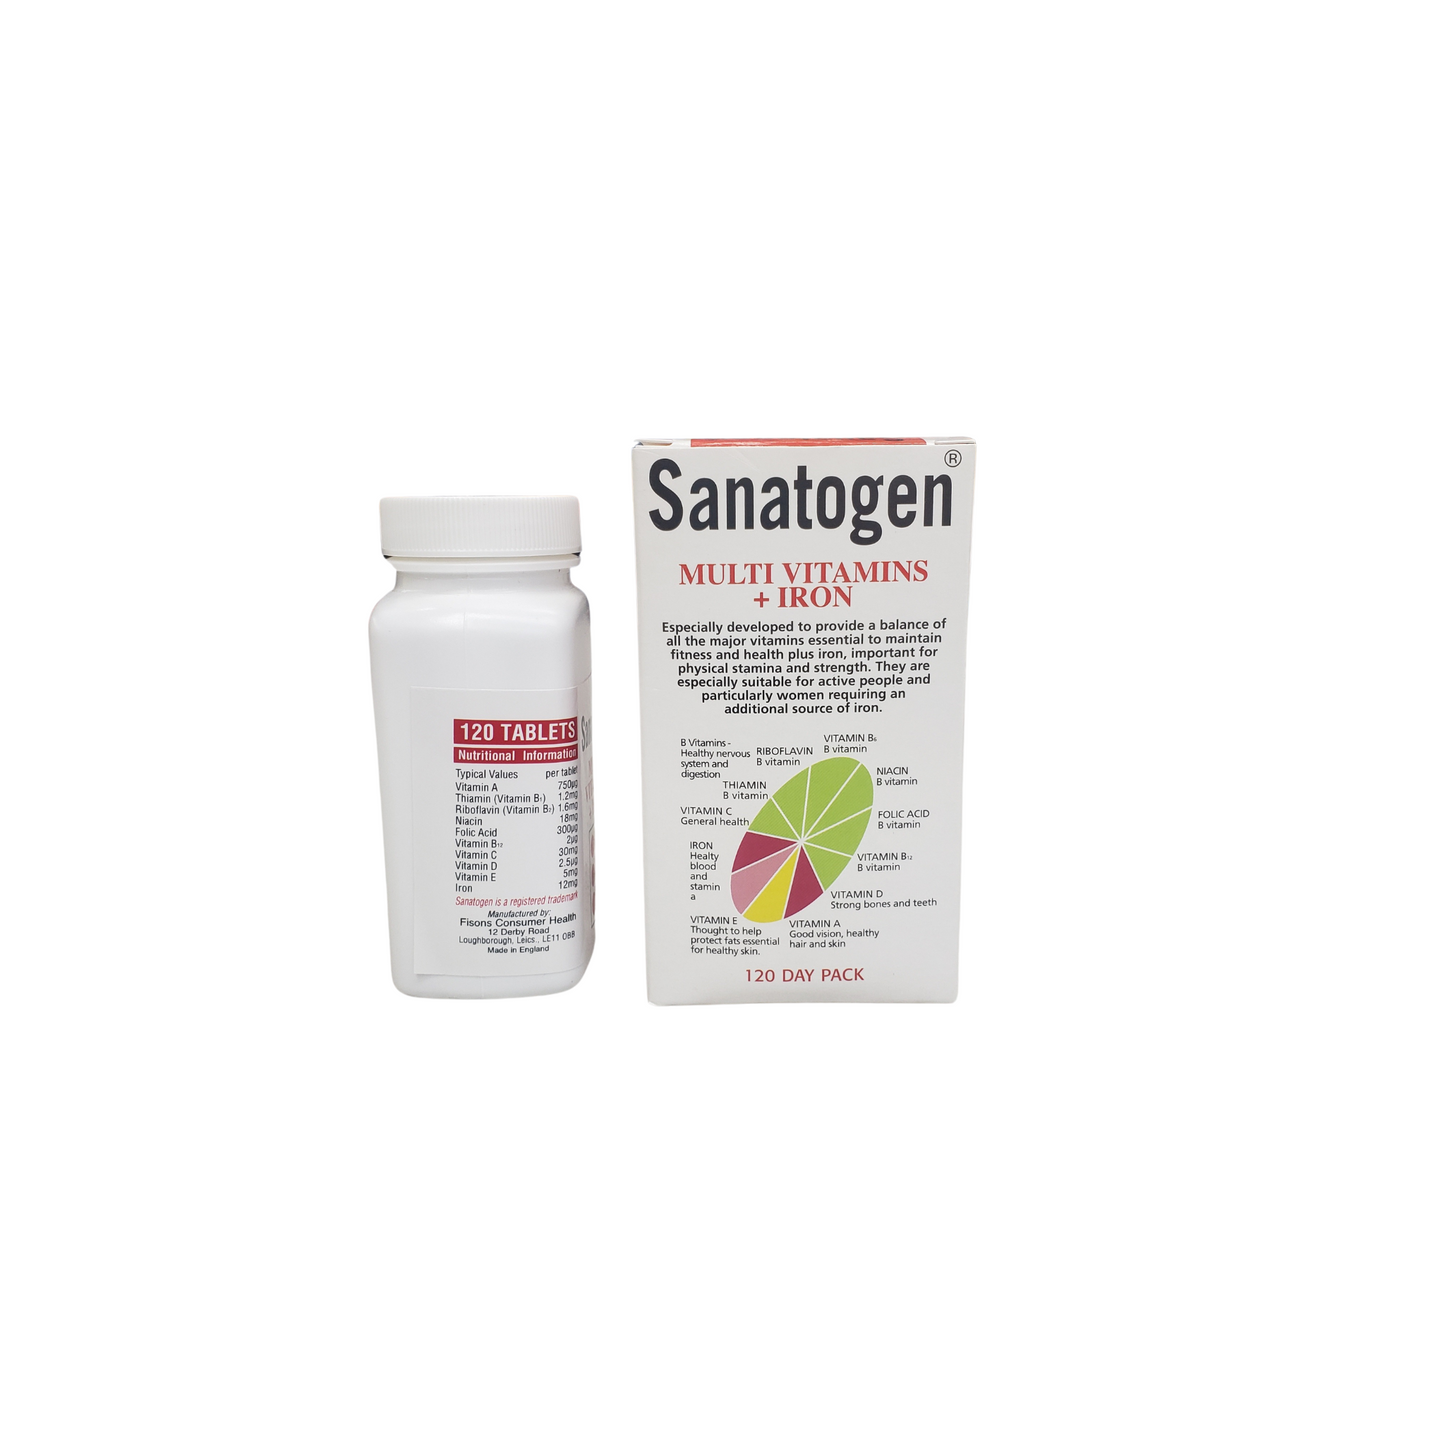 Sanatogen Multi Vitamins & Iron - 120 Tablets